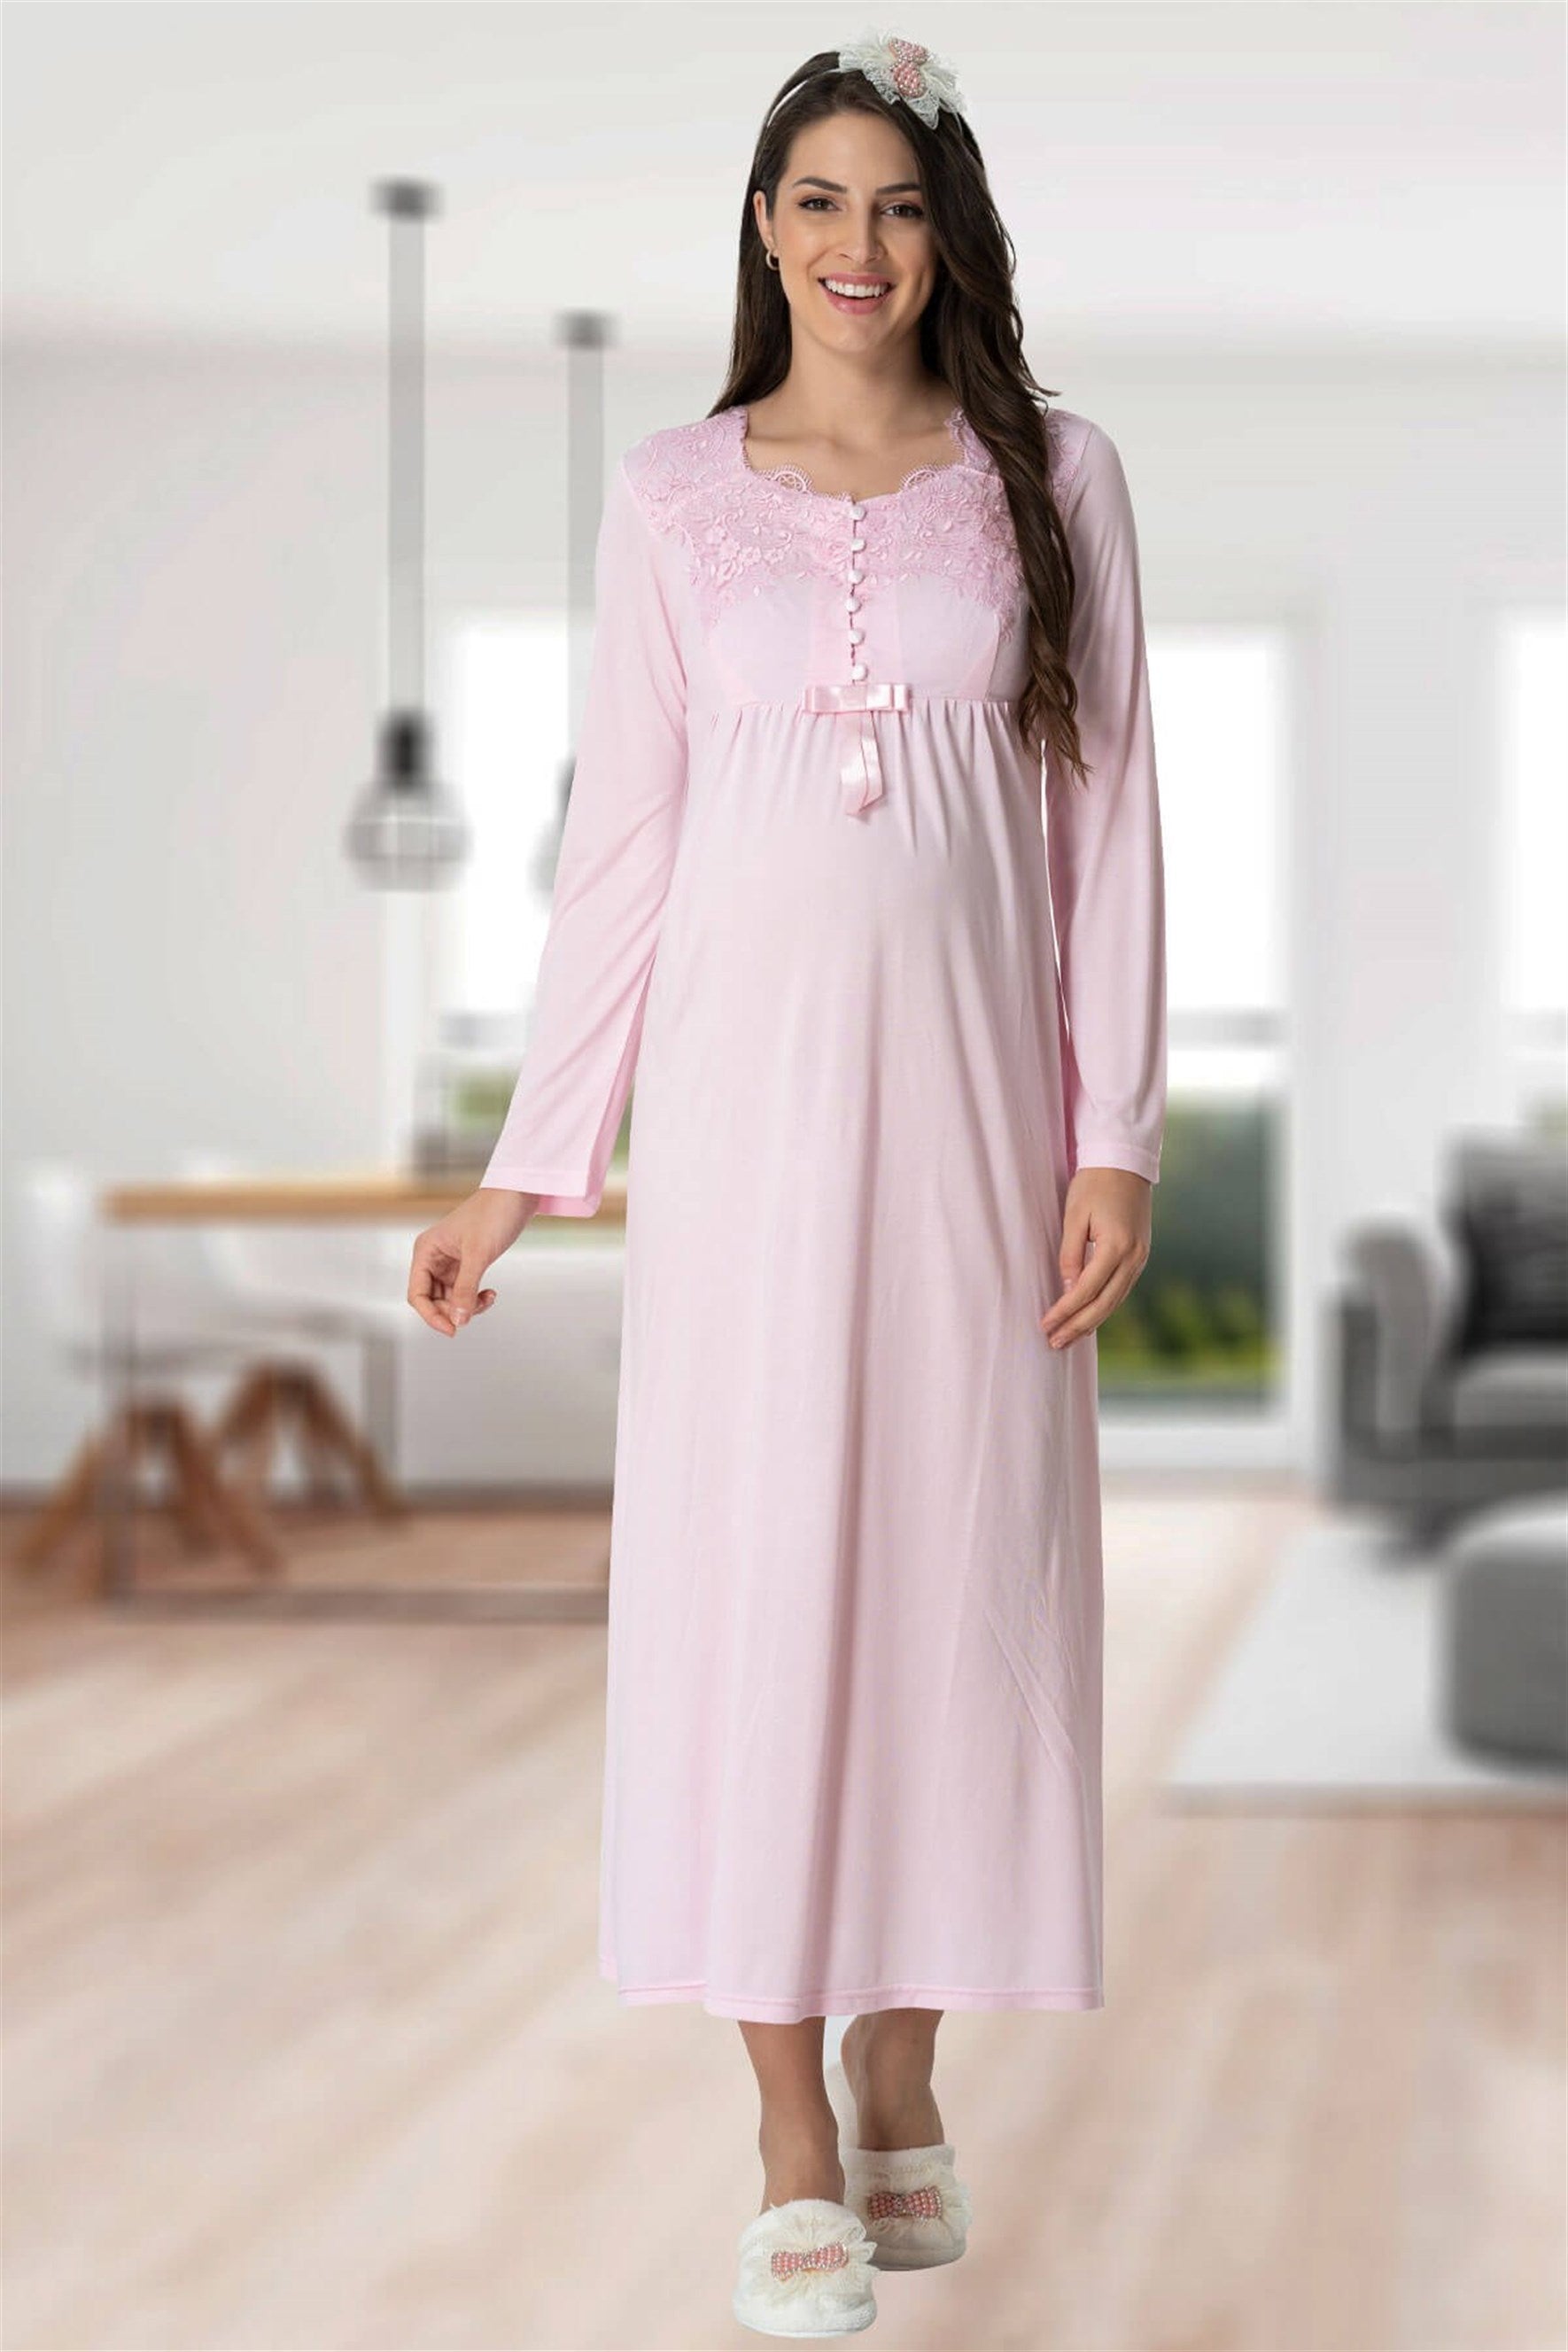 Shopymommy 5415 Elegant Lace Maternity & Nursing Nightgown Pink